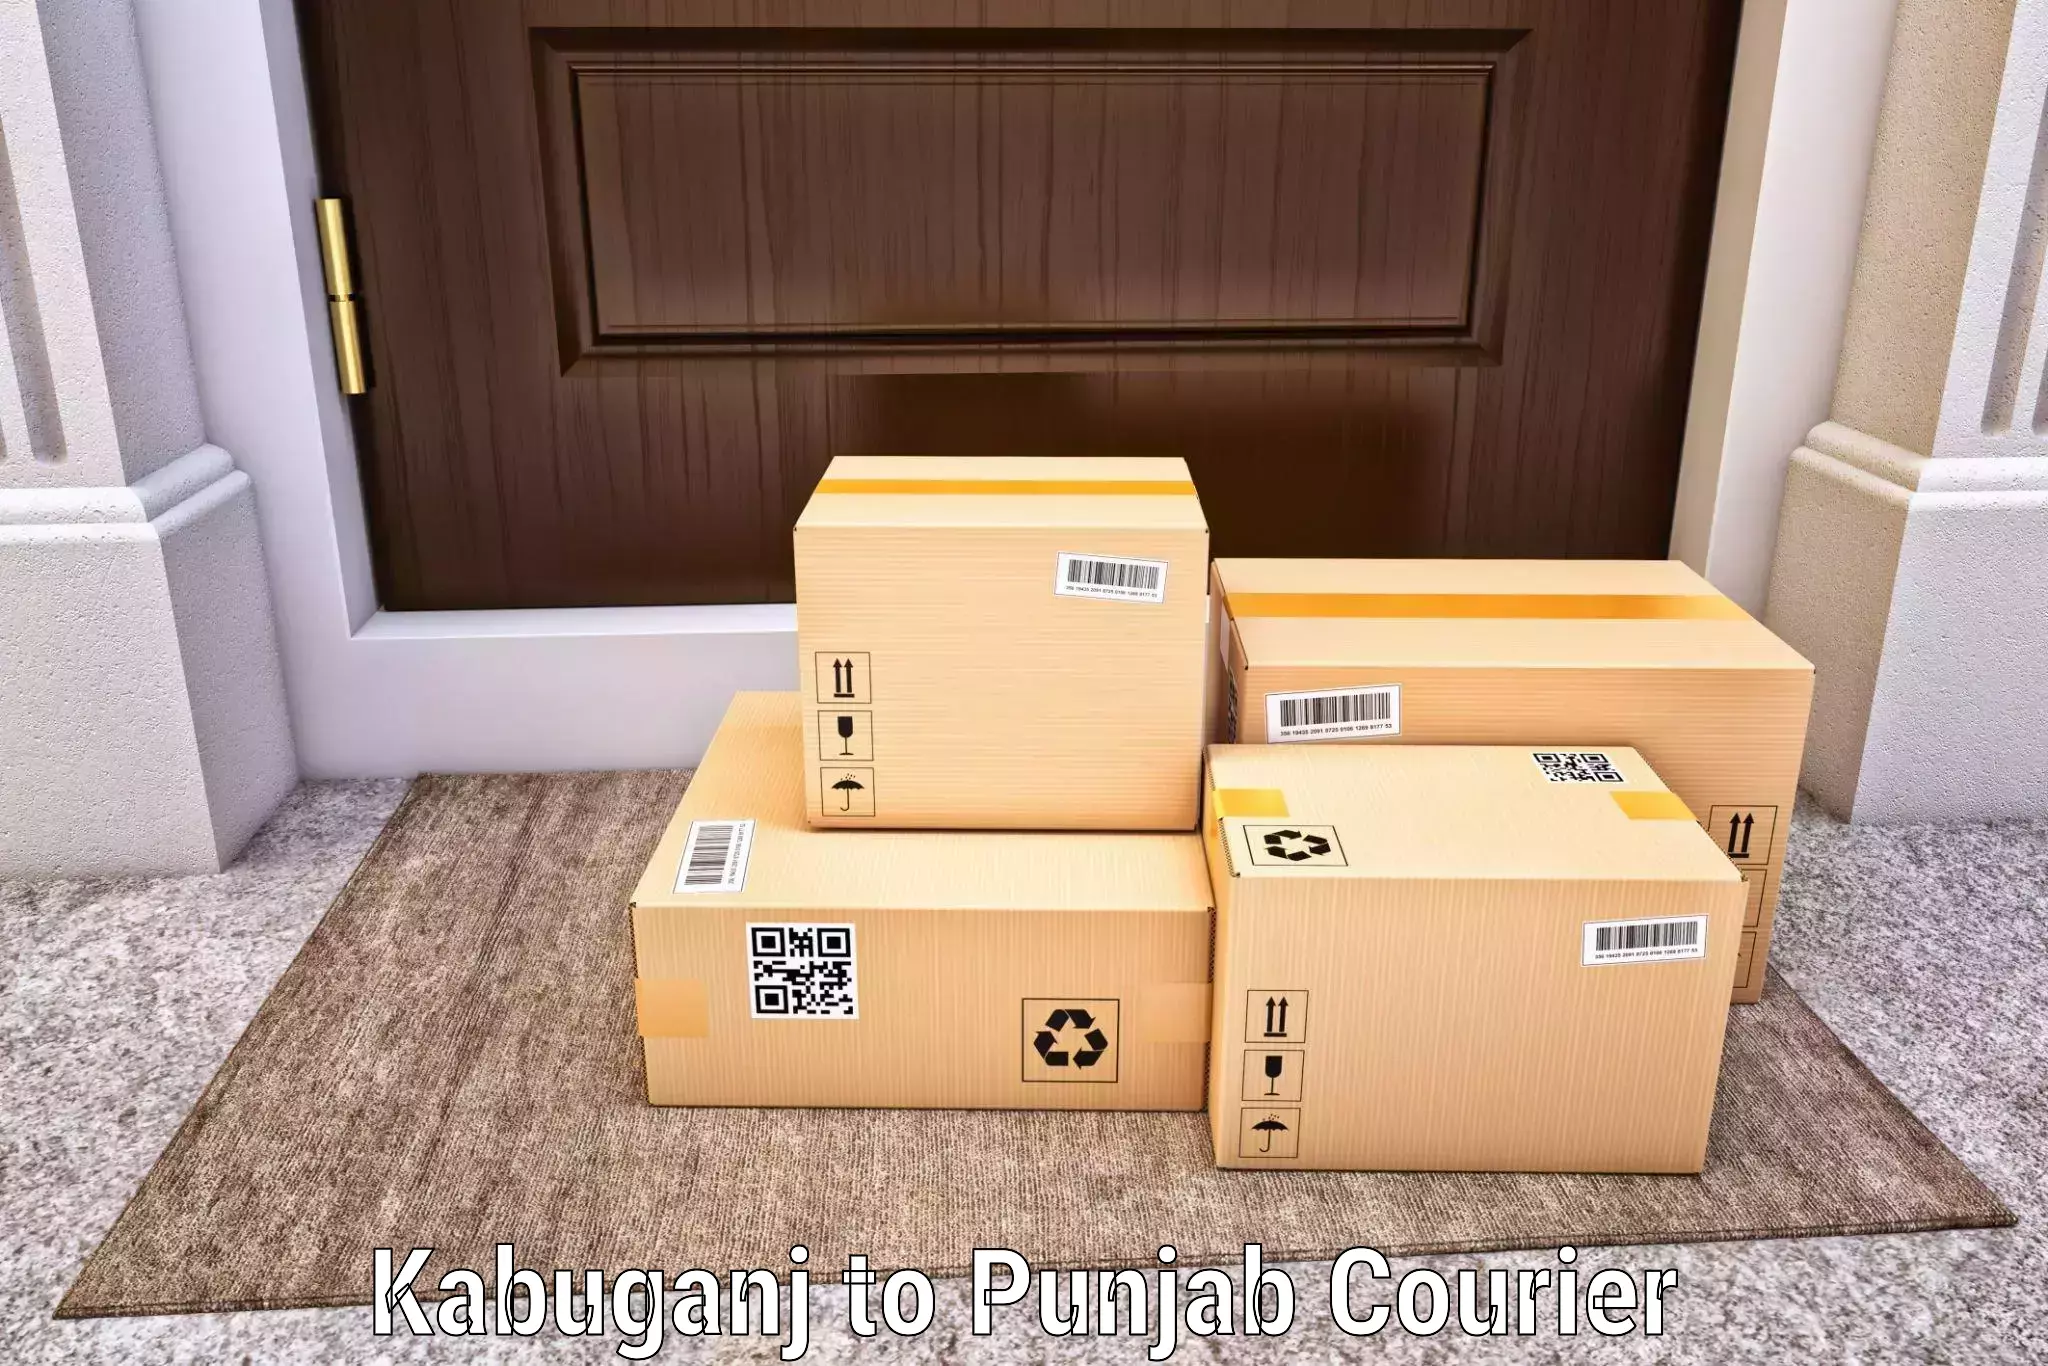 Efficient package consolidation Kabuganj to Sunam